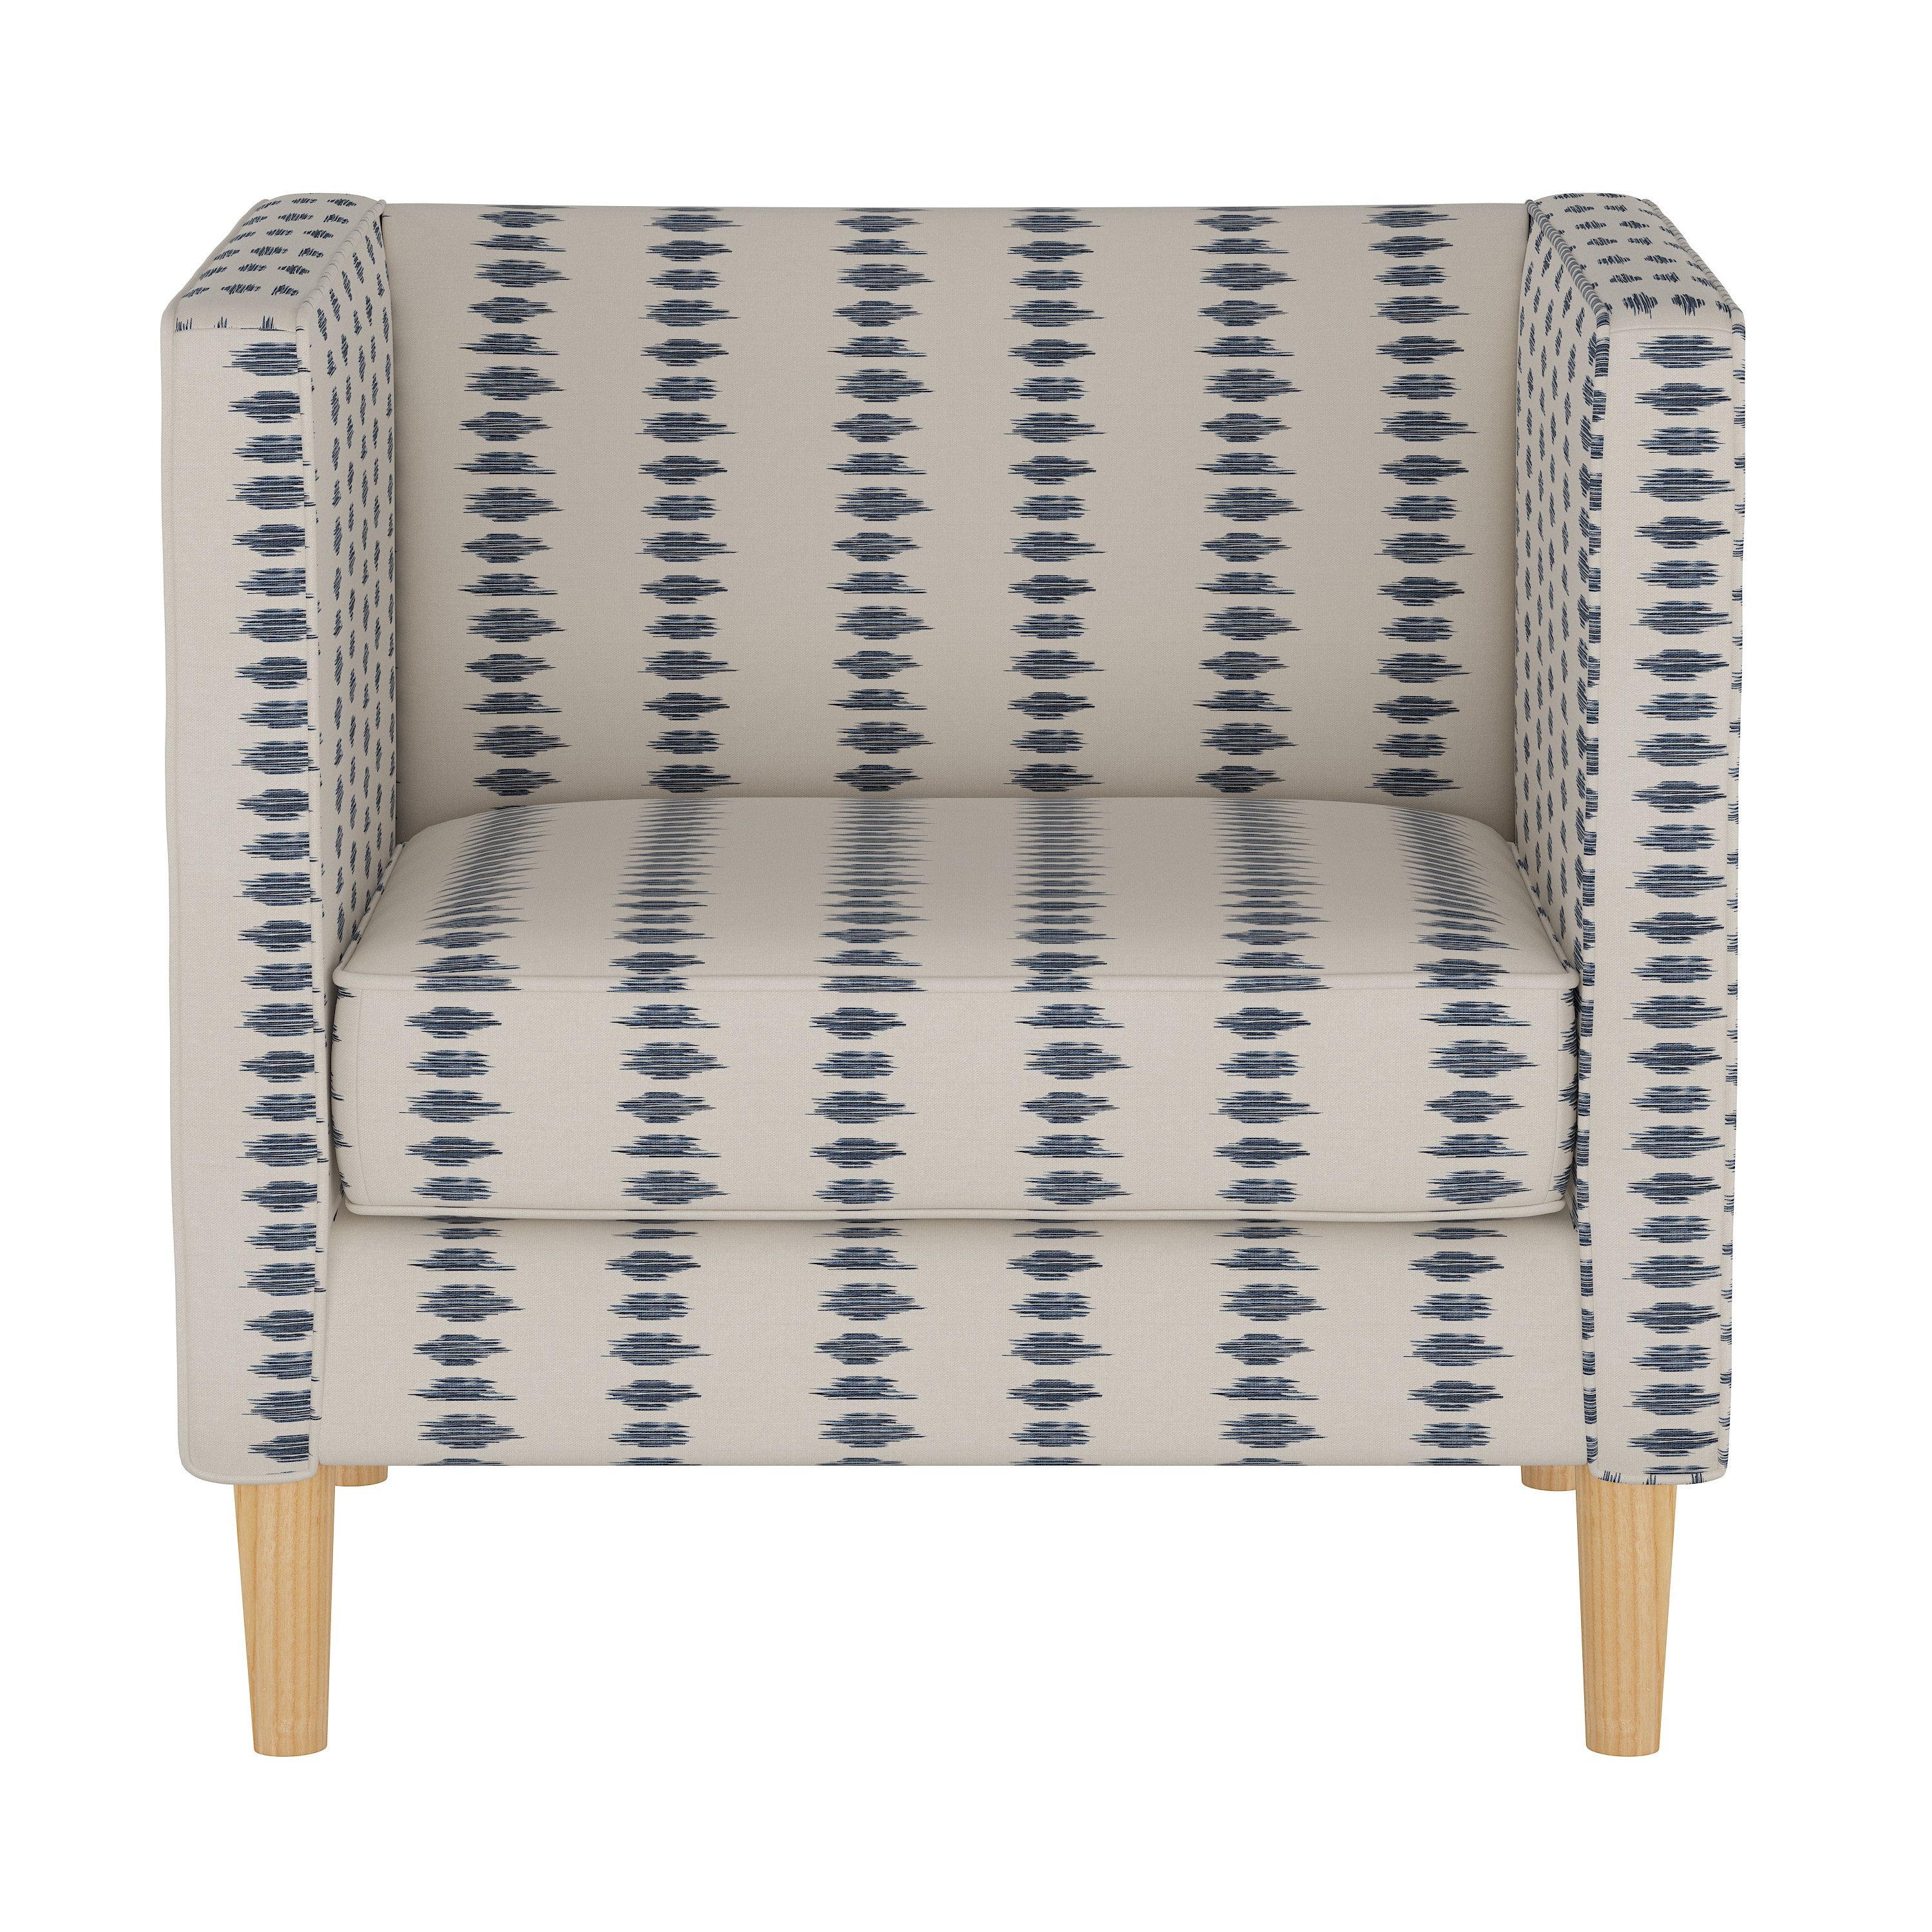 Bucktown Chair - Image 1